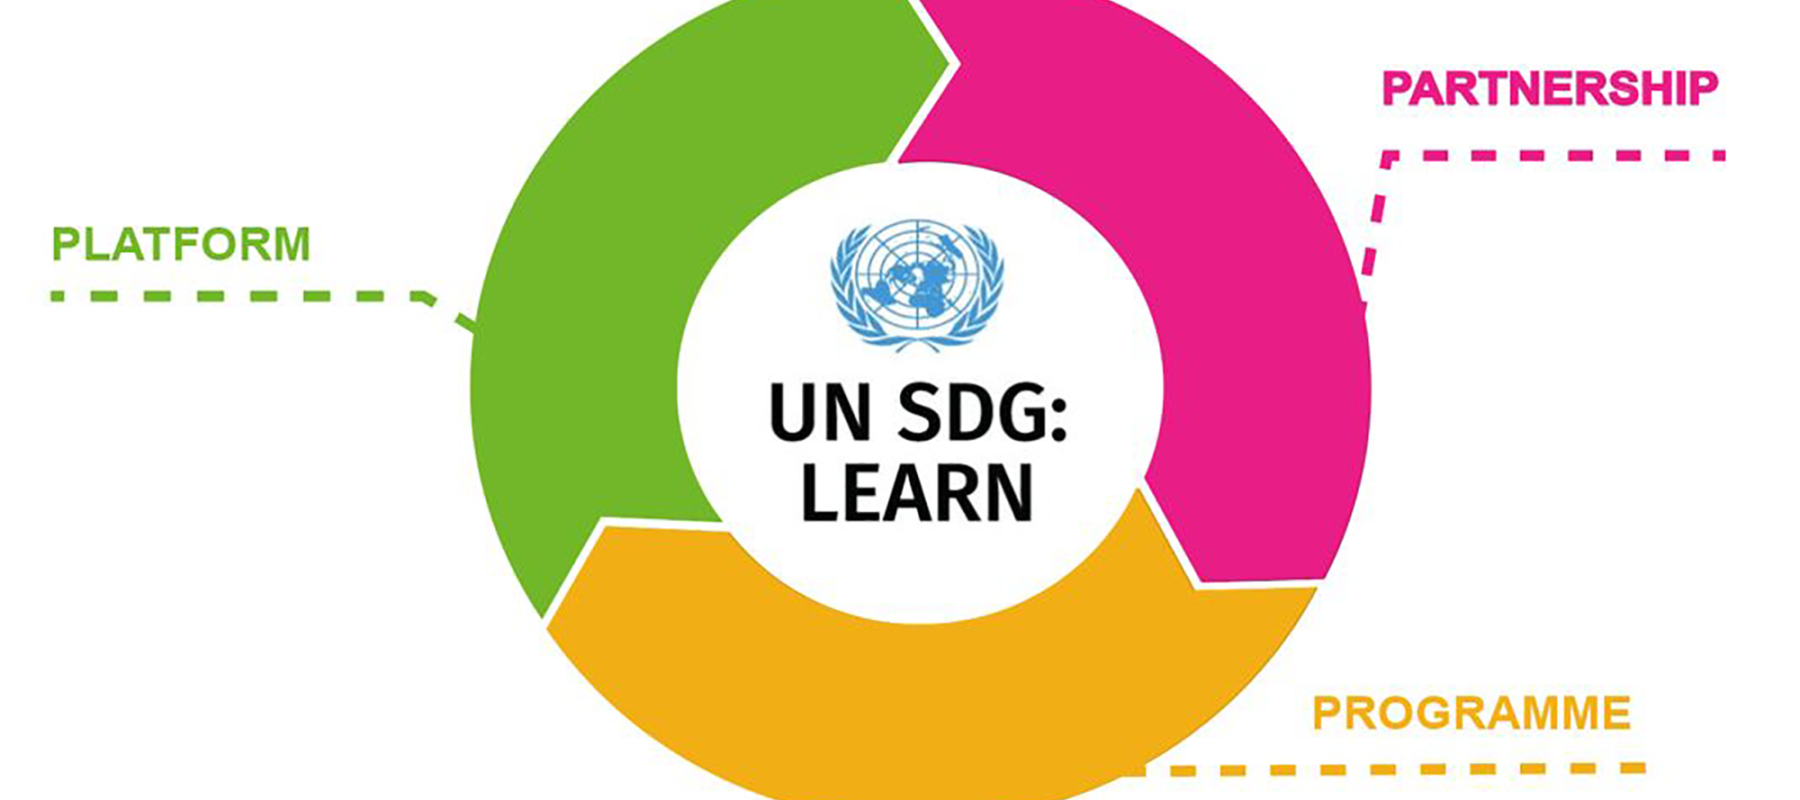 UN SDG: Learn